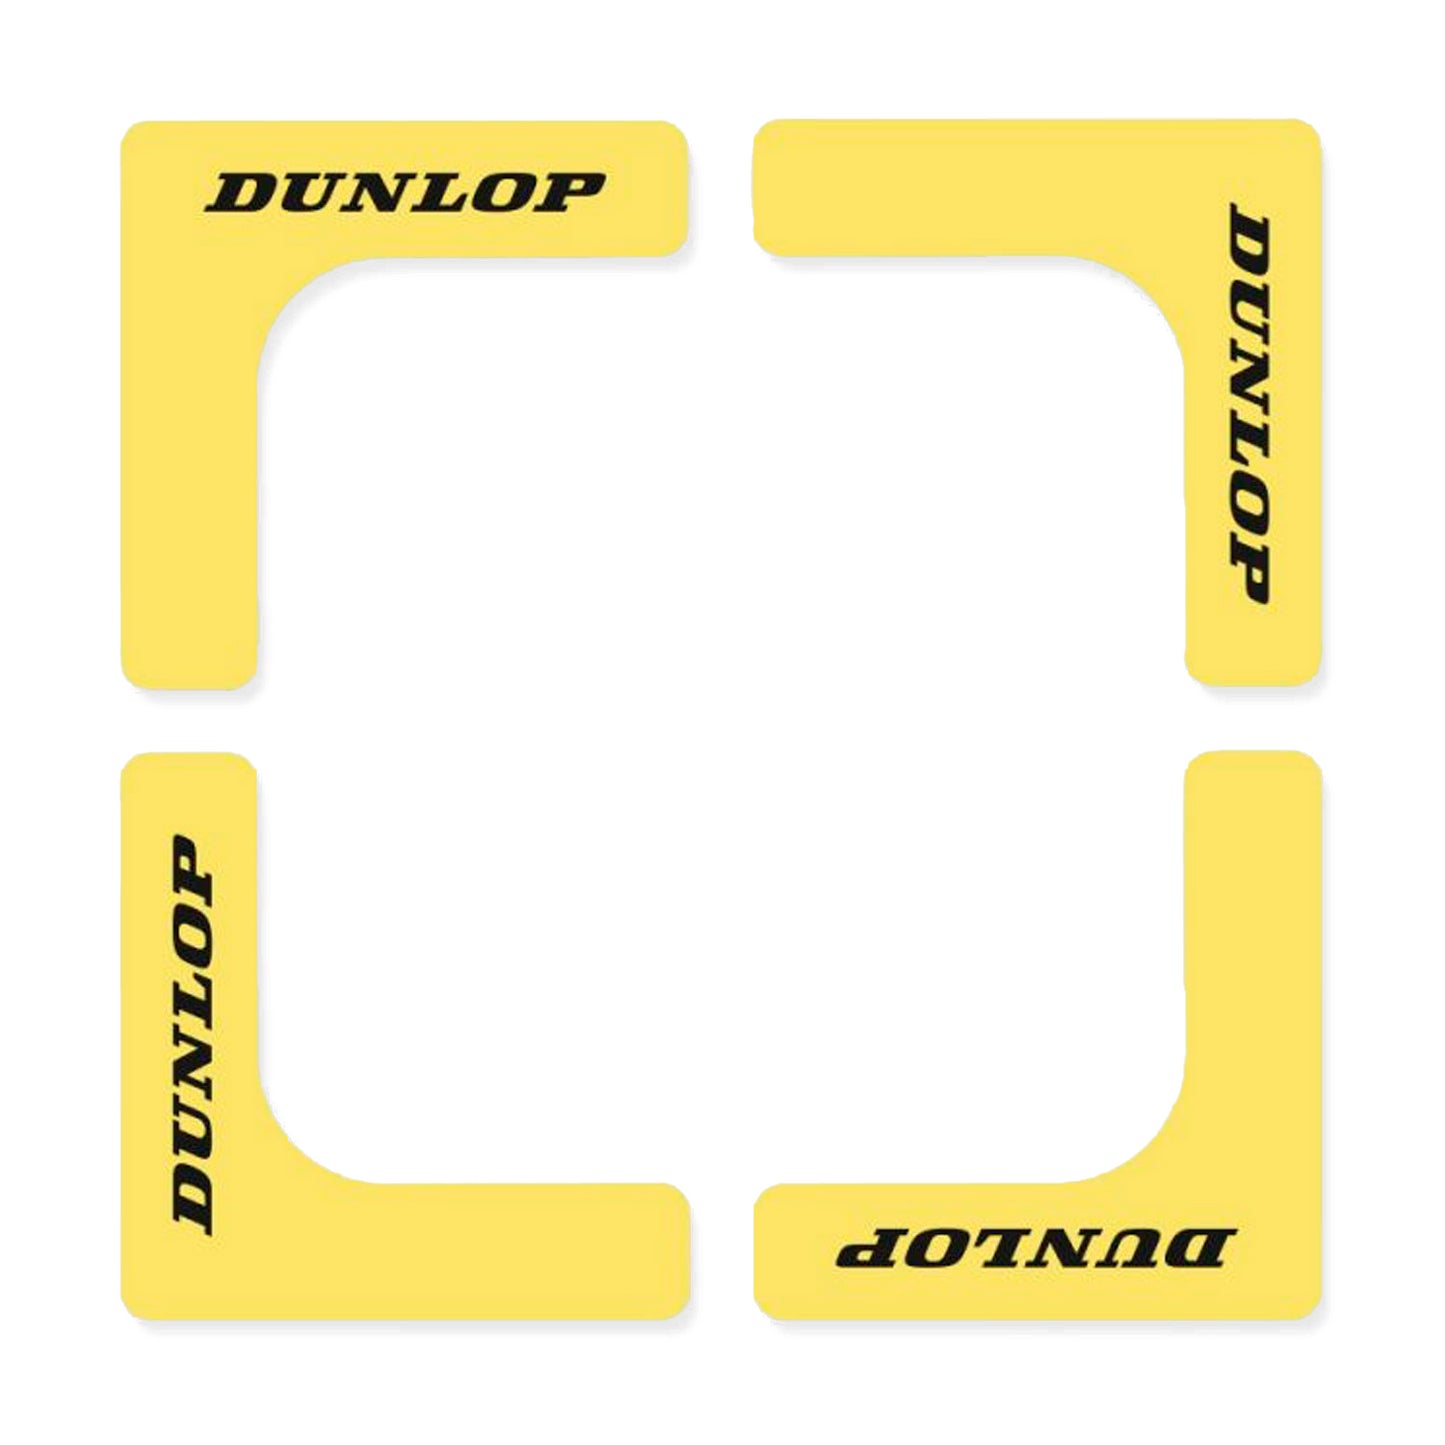 Dunlop Badminton Court Edge - Yellow (8 Pack)